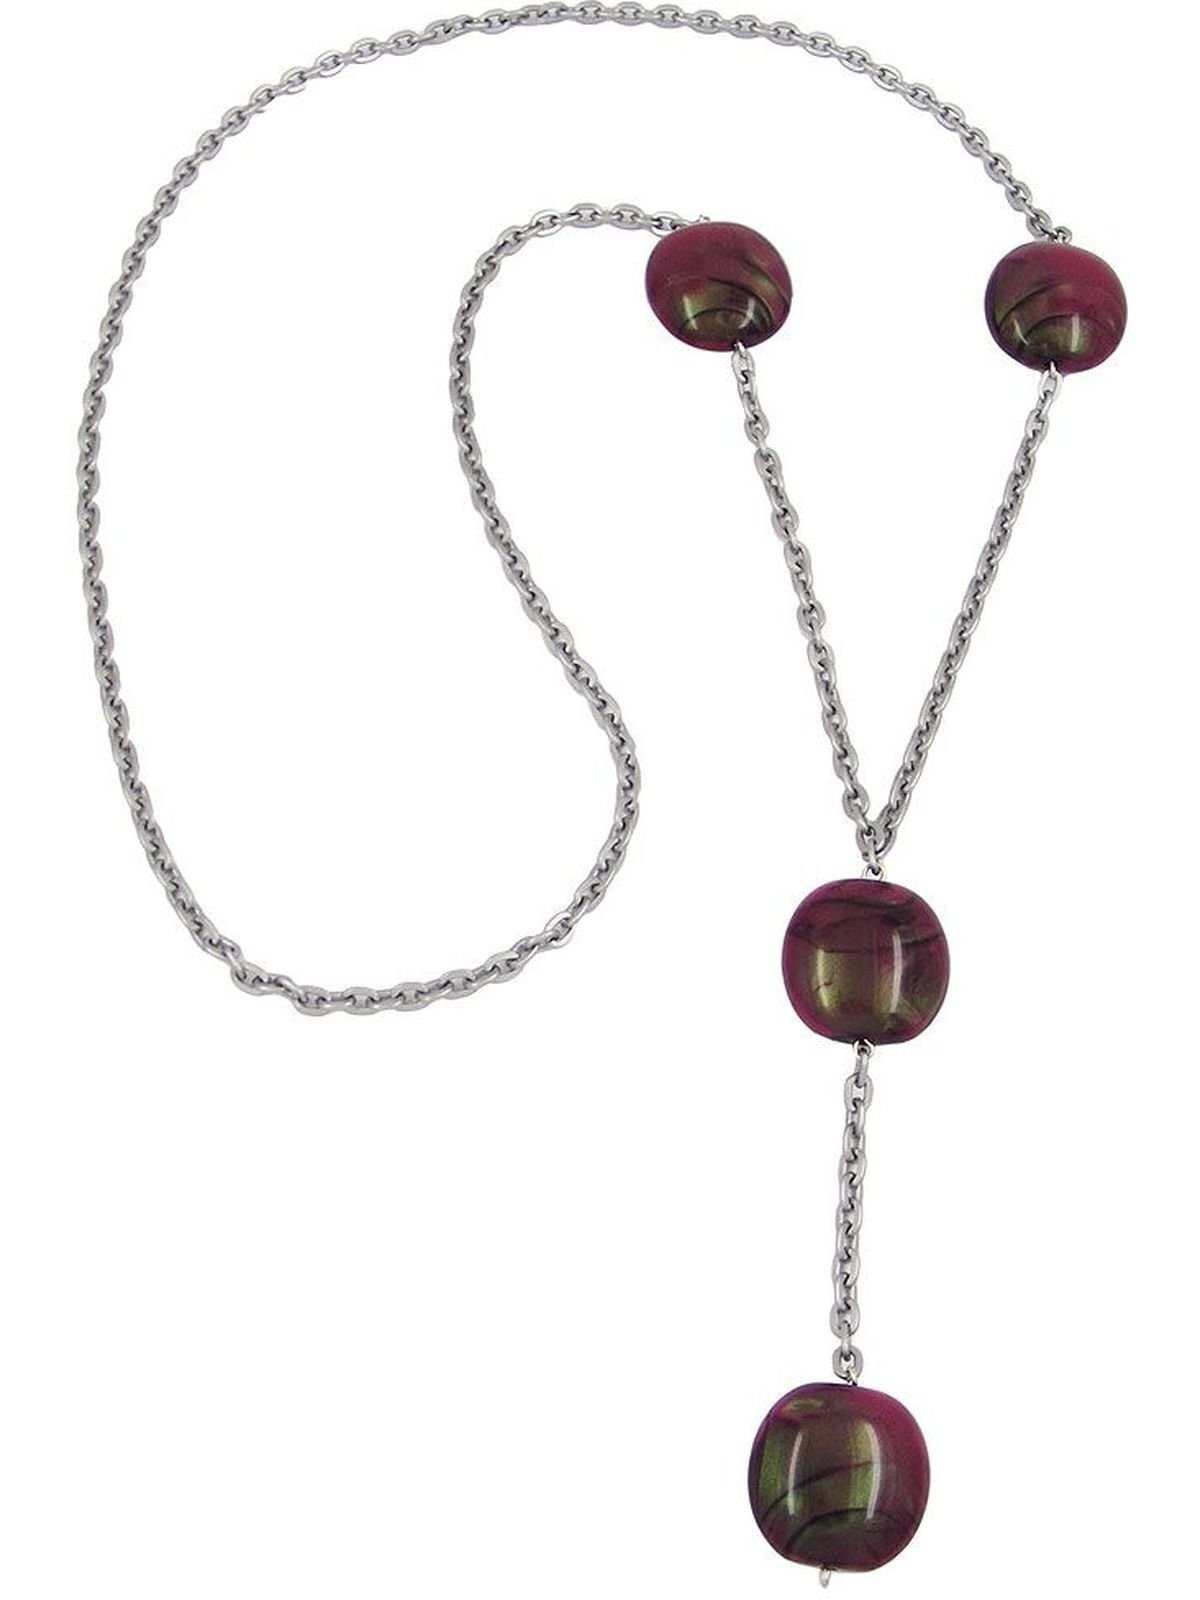 Gallay Perlenkette Kunststoffperlen Eloxal pflaume-seide-matt Nugget 100cm grau Ankerkette